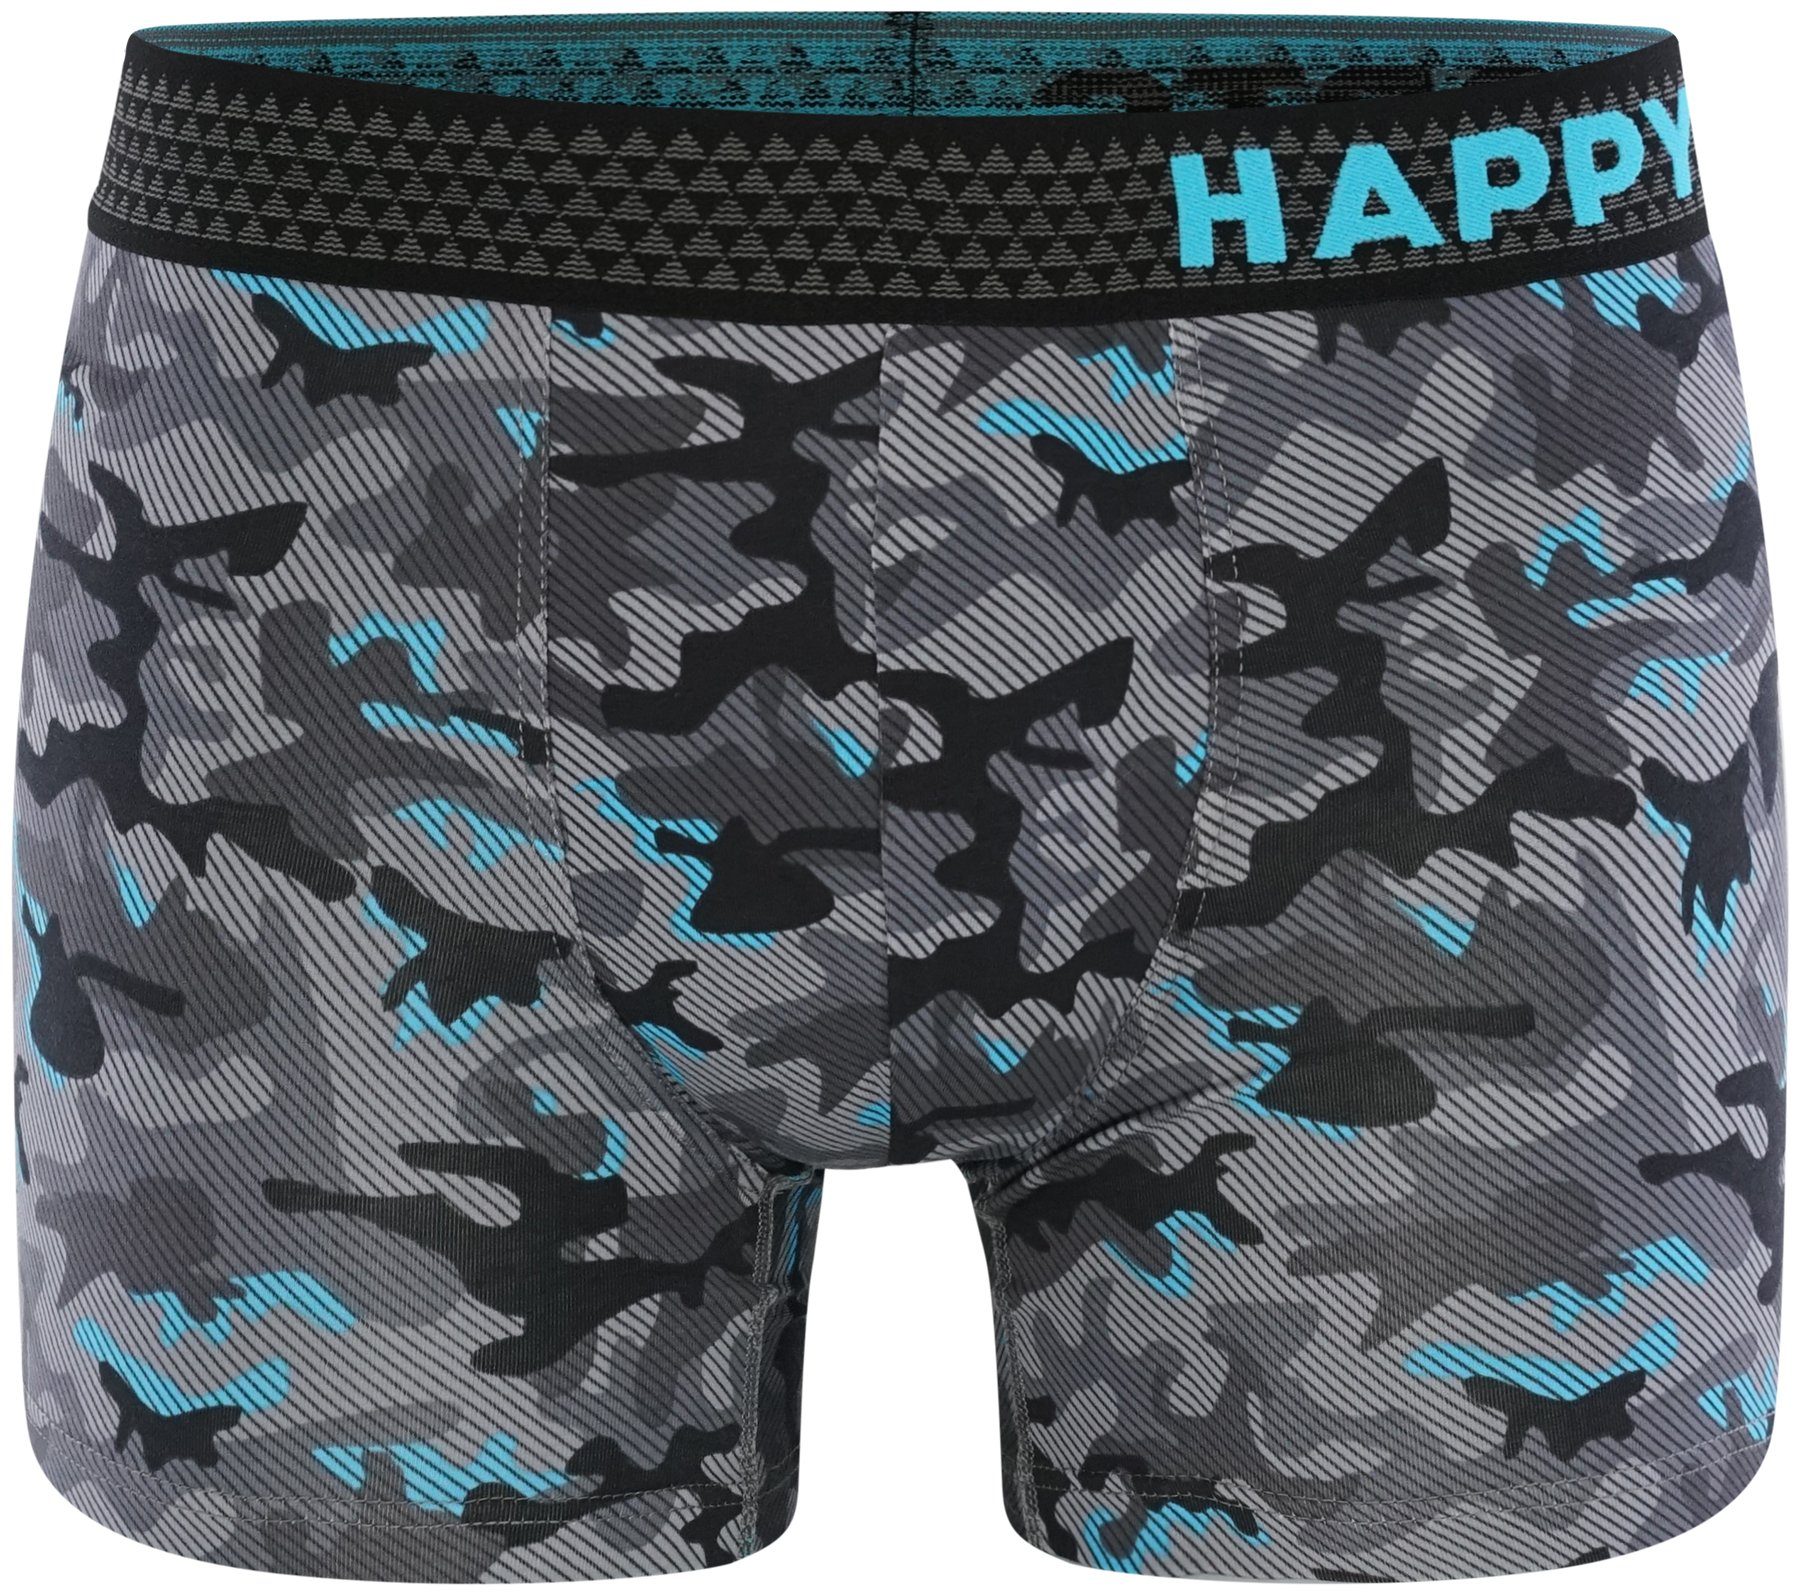 Retro SHORTS Trunks Pants HAPPY 3-Pack (3-St) Camouflage Aqua